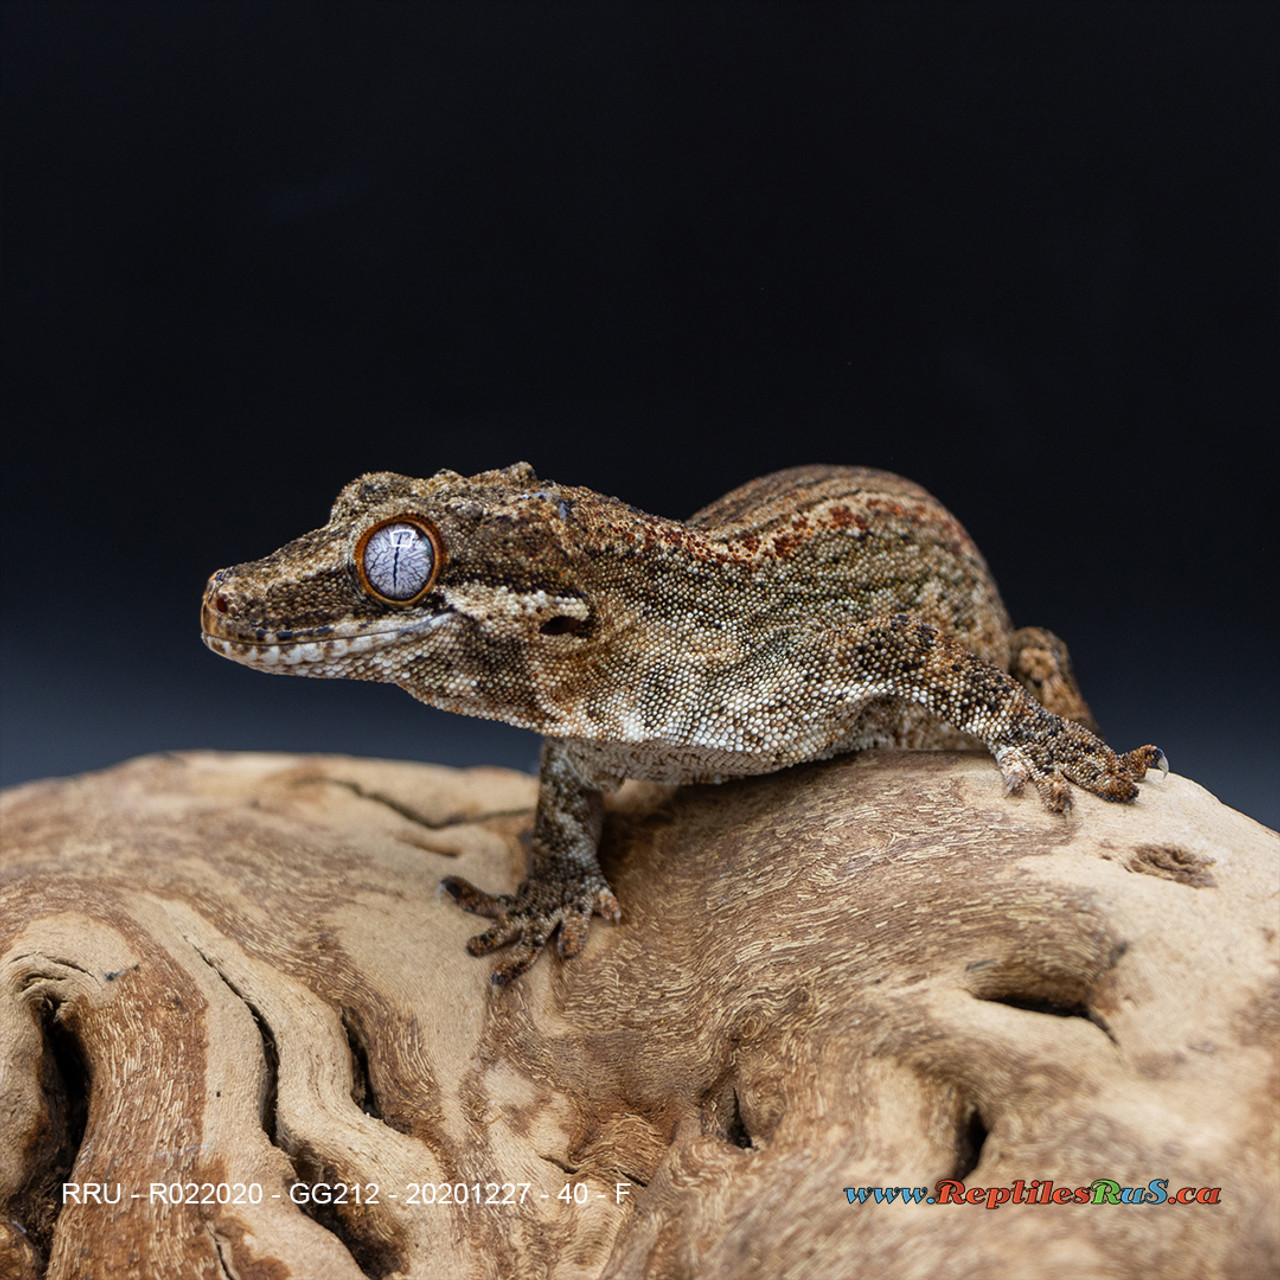 Gargoyle Gecko (40g Female) GG212 Proven Breeder - See Notes